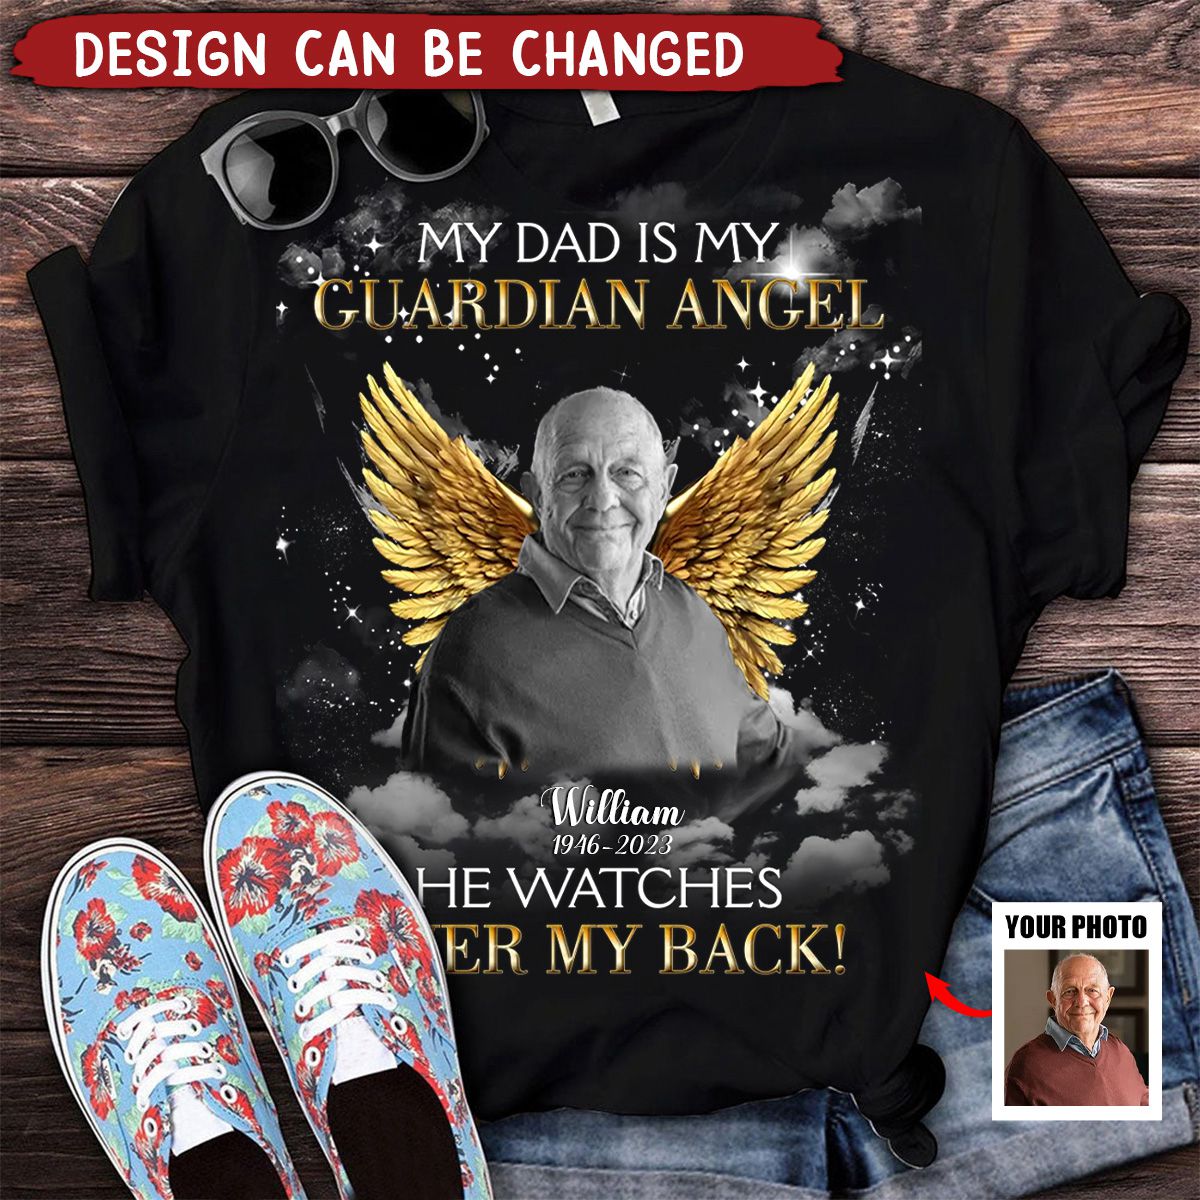 Custom Memorial Mom/ Dad T-shirt - Upload Photo - Memorial Gift Idea For Family Member - My Mom Is My Guardian Angel